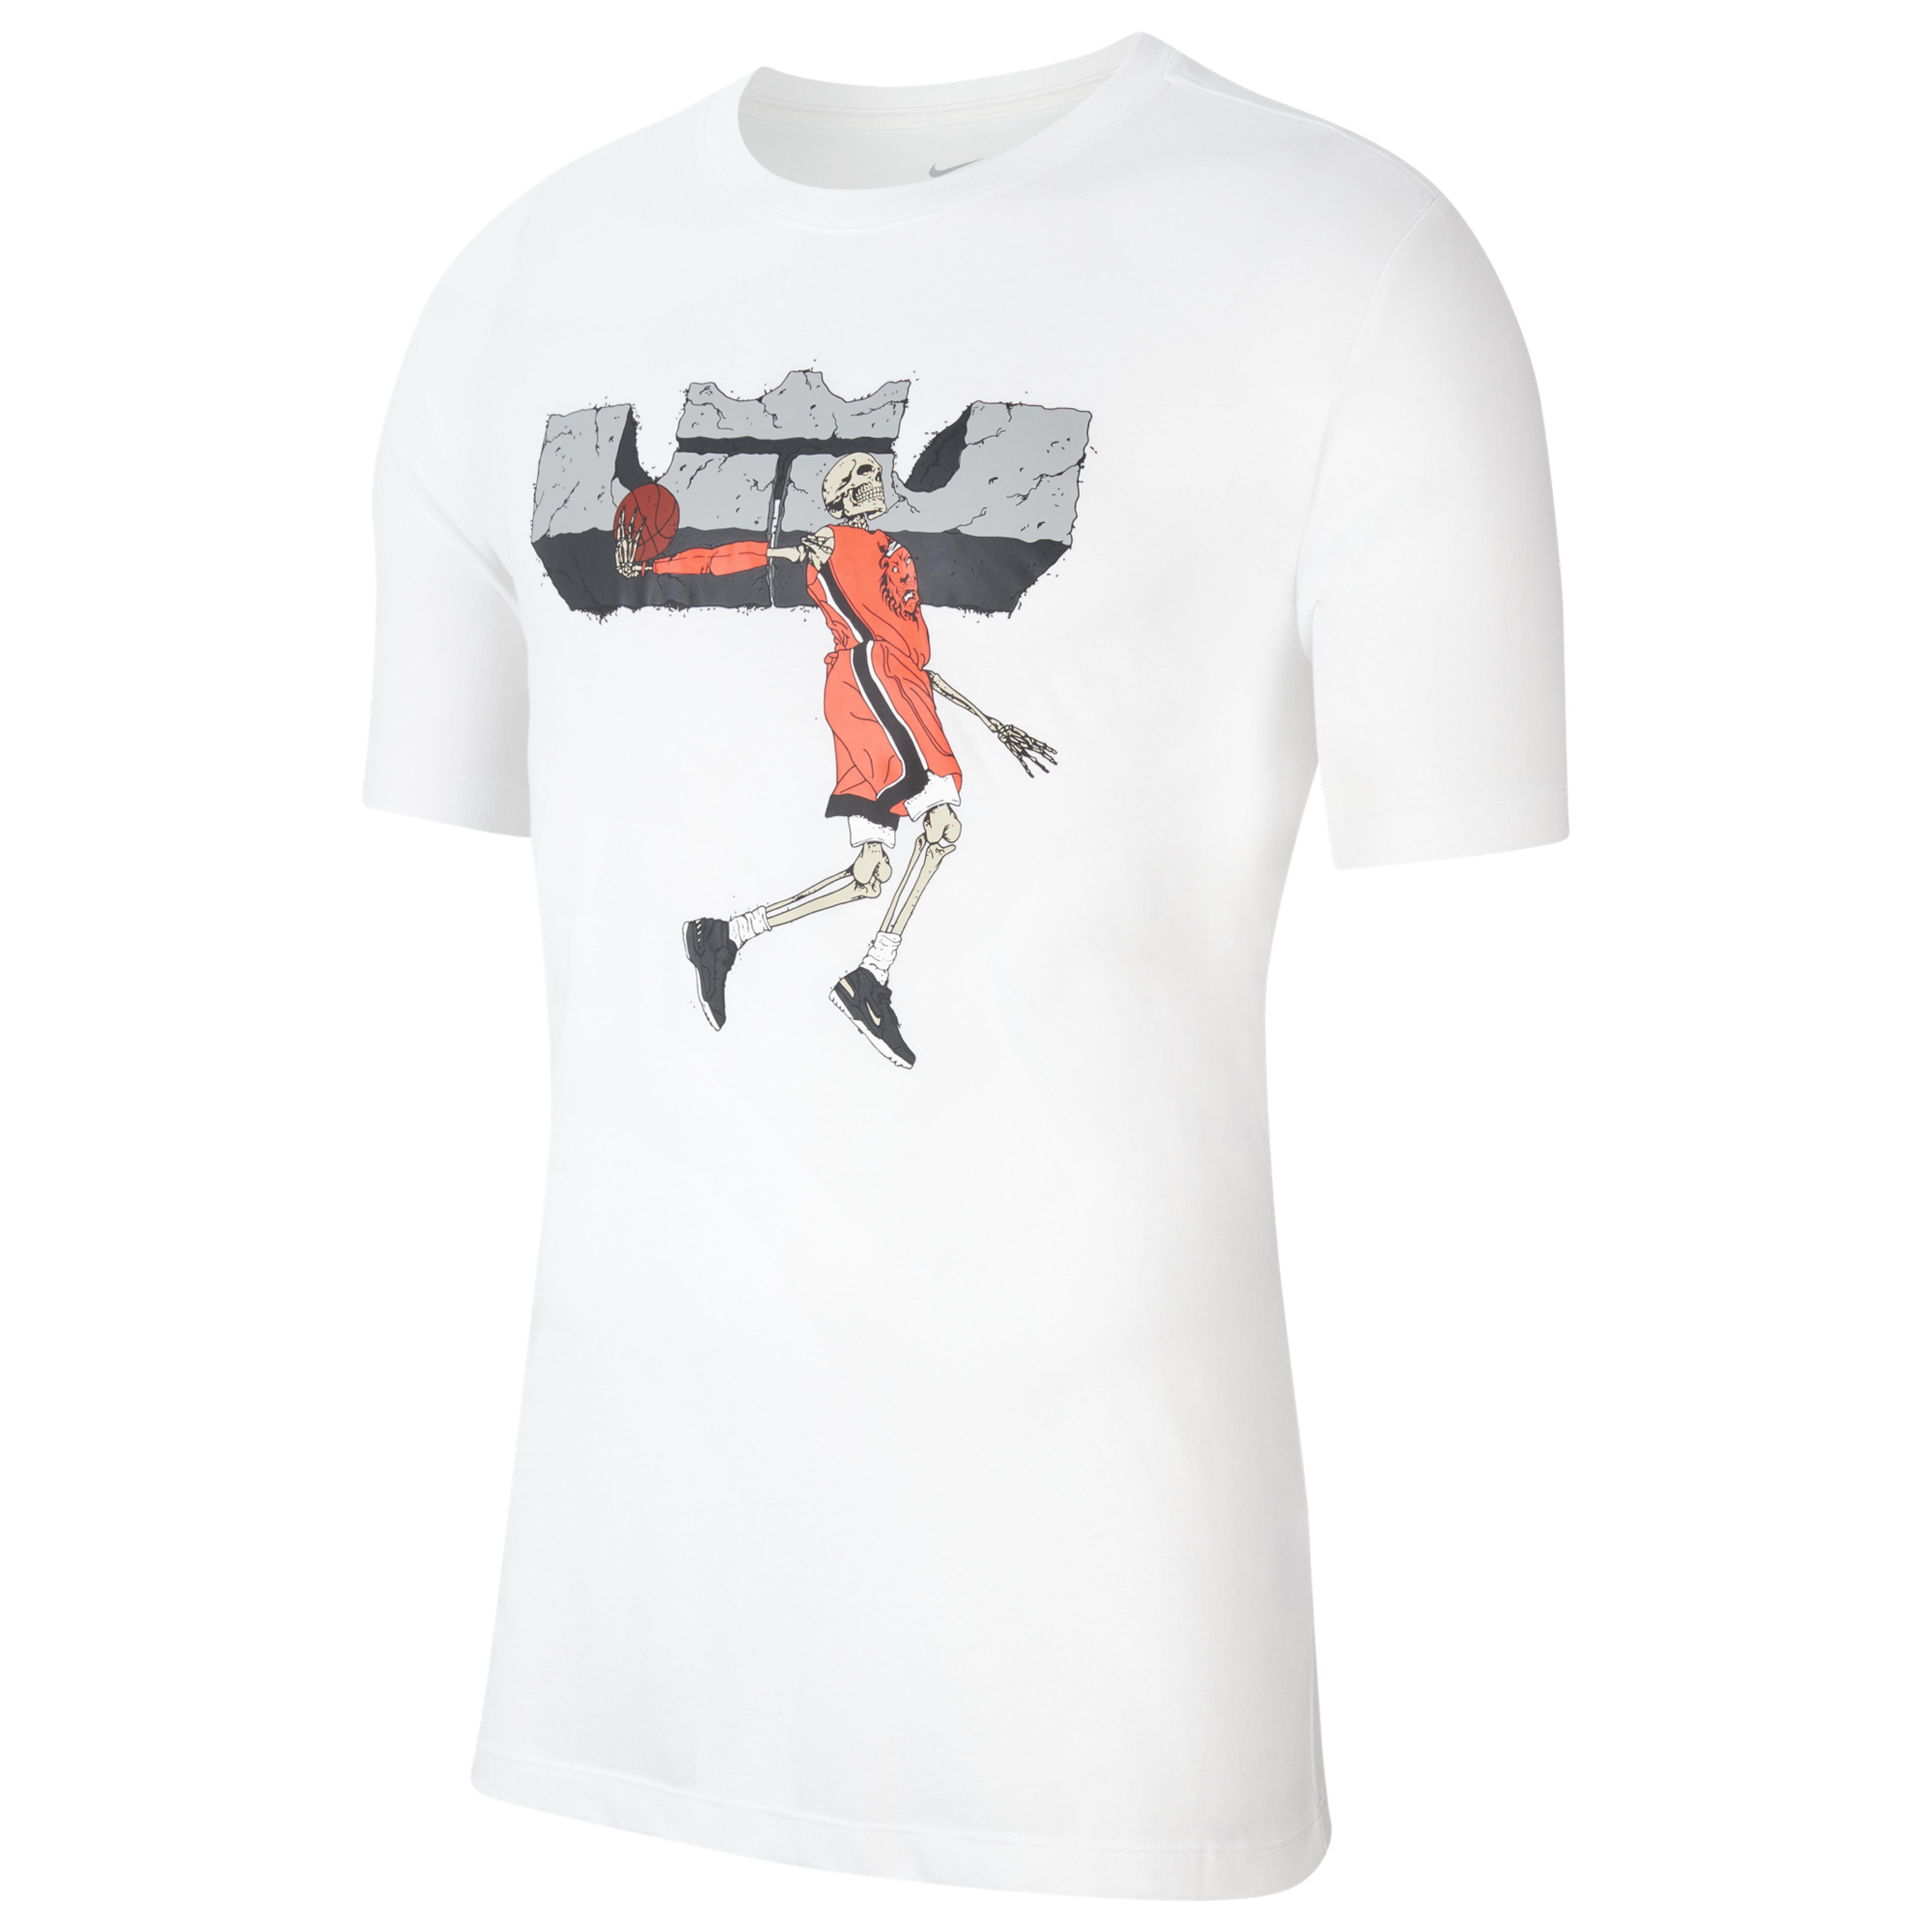 Nike Cotton Lebron Logo T-shirt in White for Men - Lyst